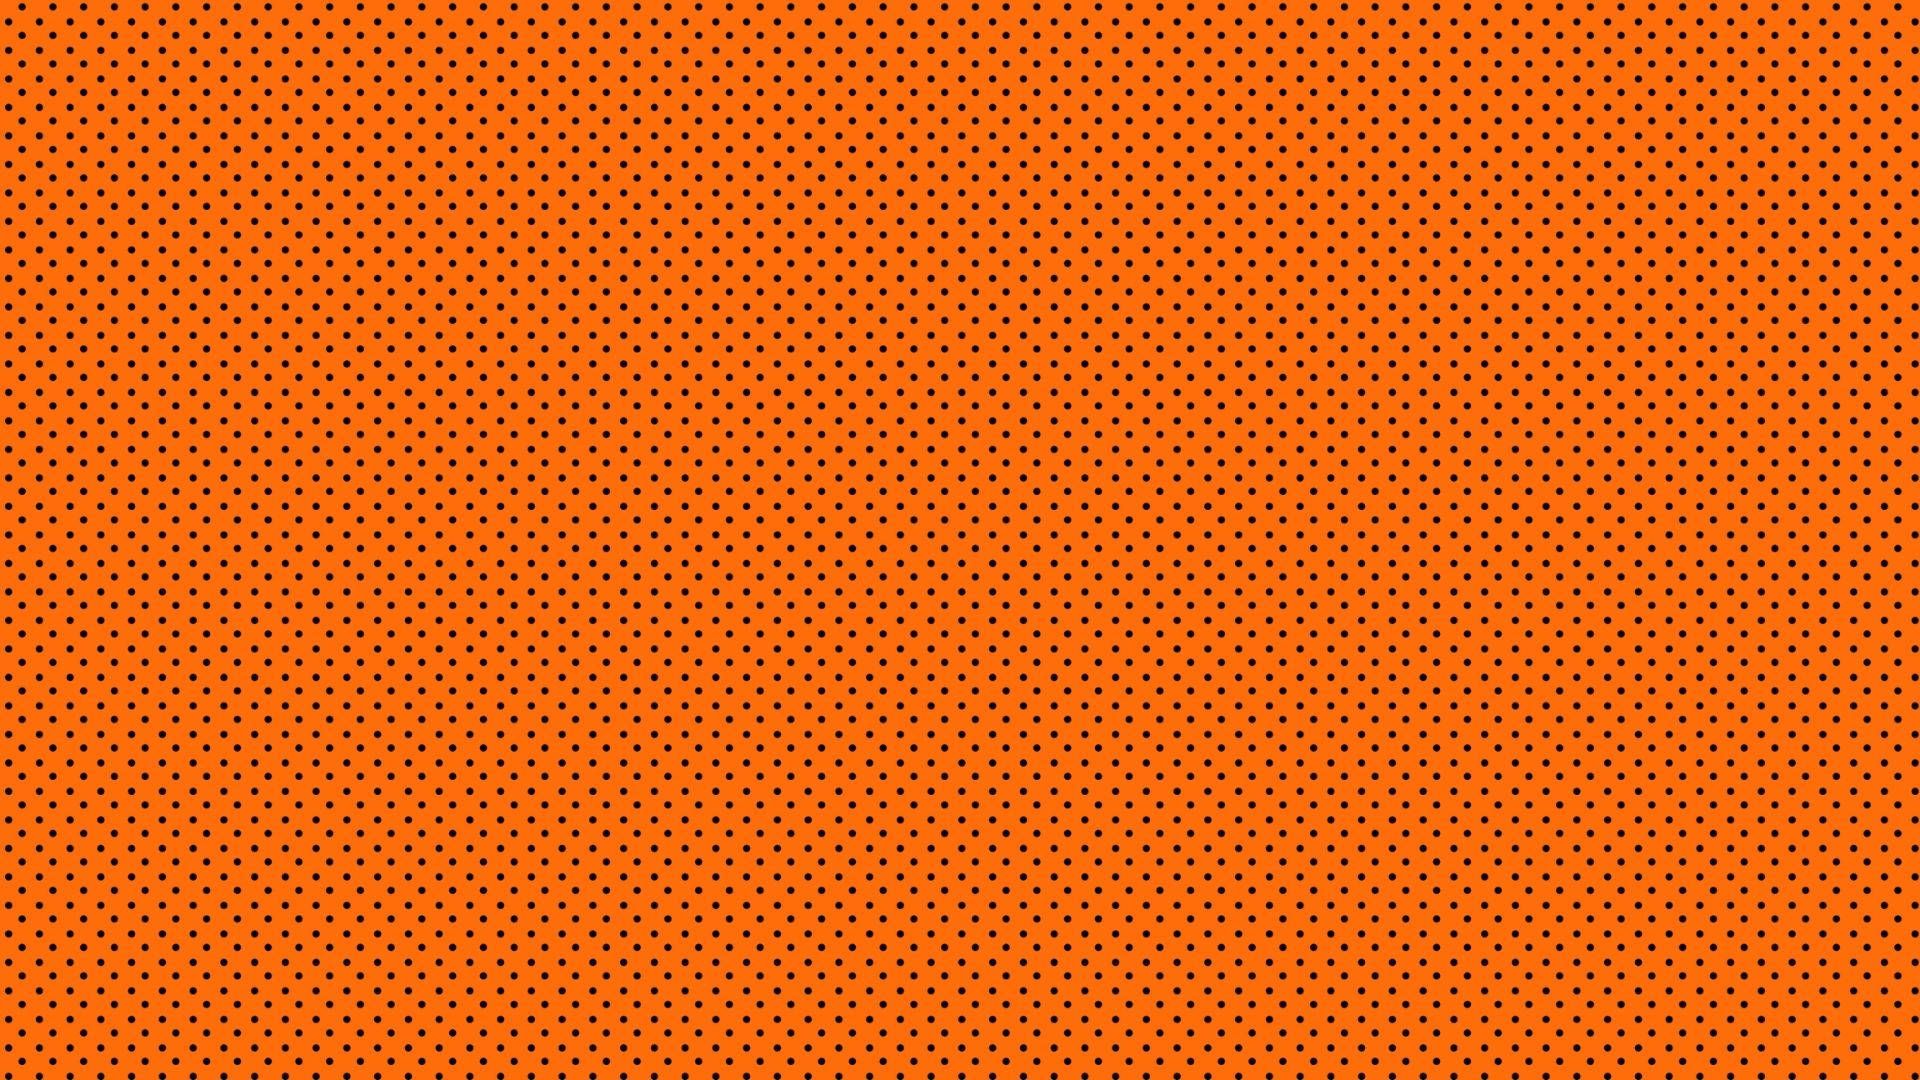 Free Orange Background Wallpaper Downloads, Orange Background Wallpaper for FREE